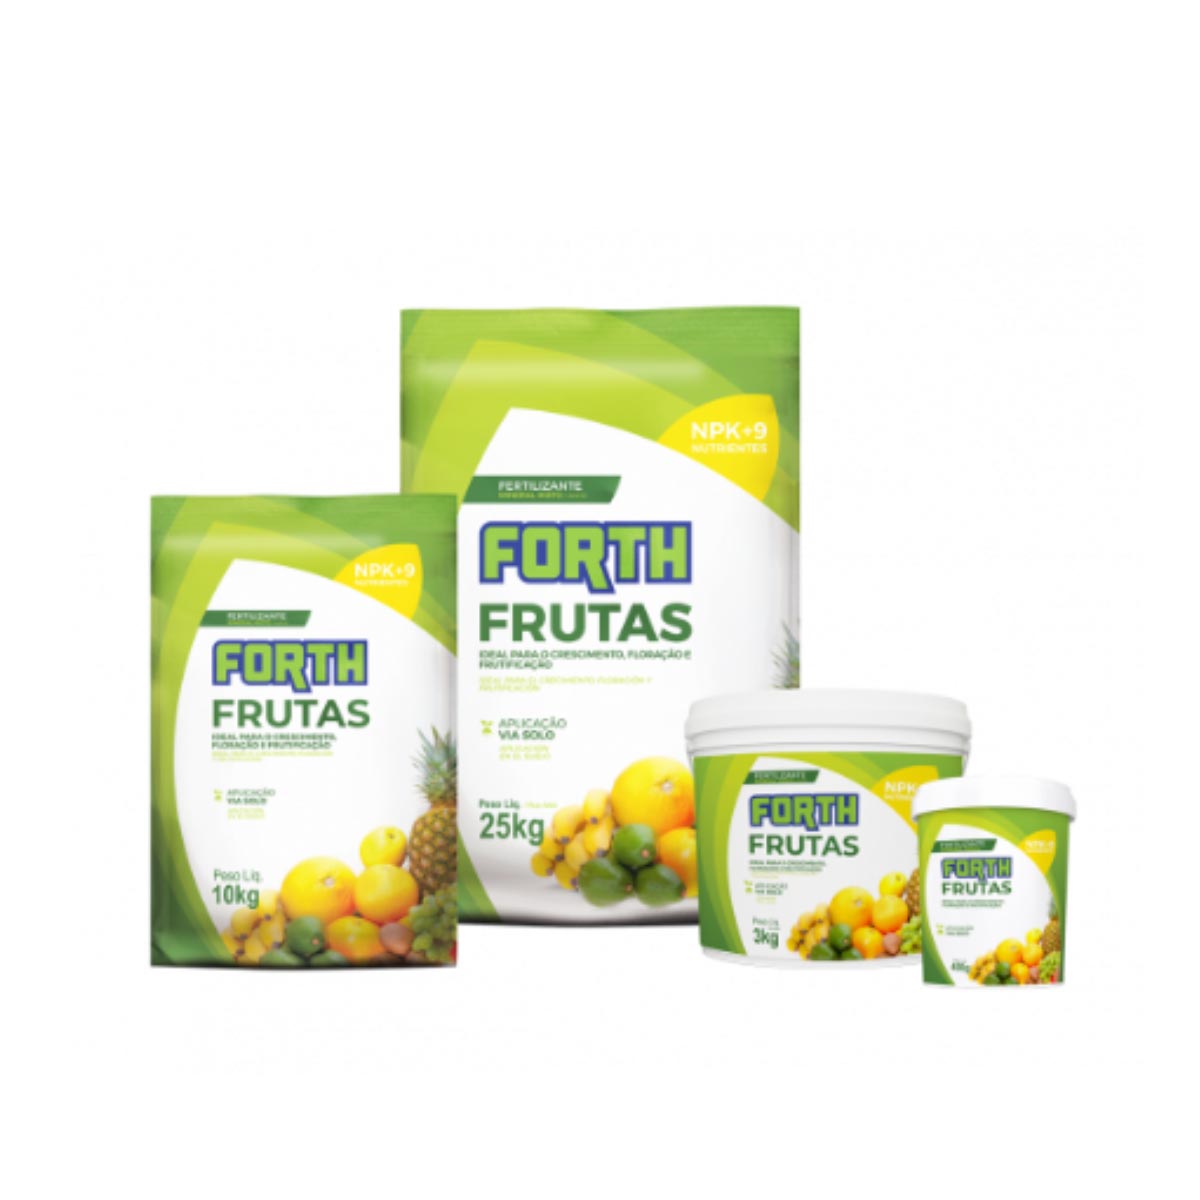 Adubo Fertilizante Forth Frutas 3Kg Favorece Frutificacao do Pomar